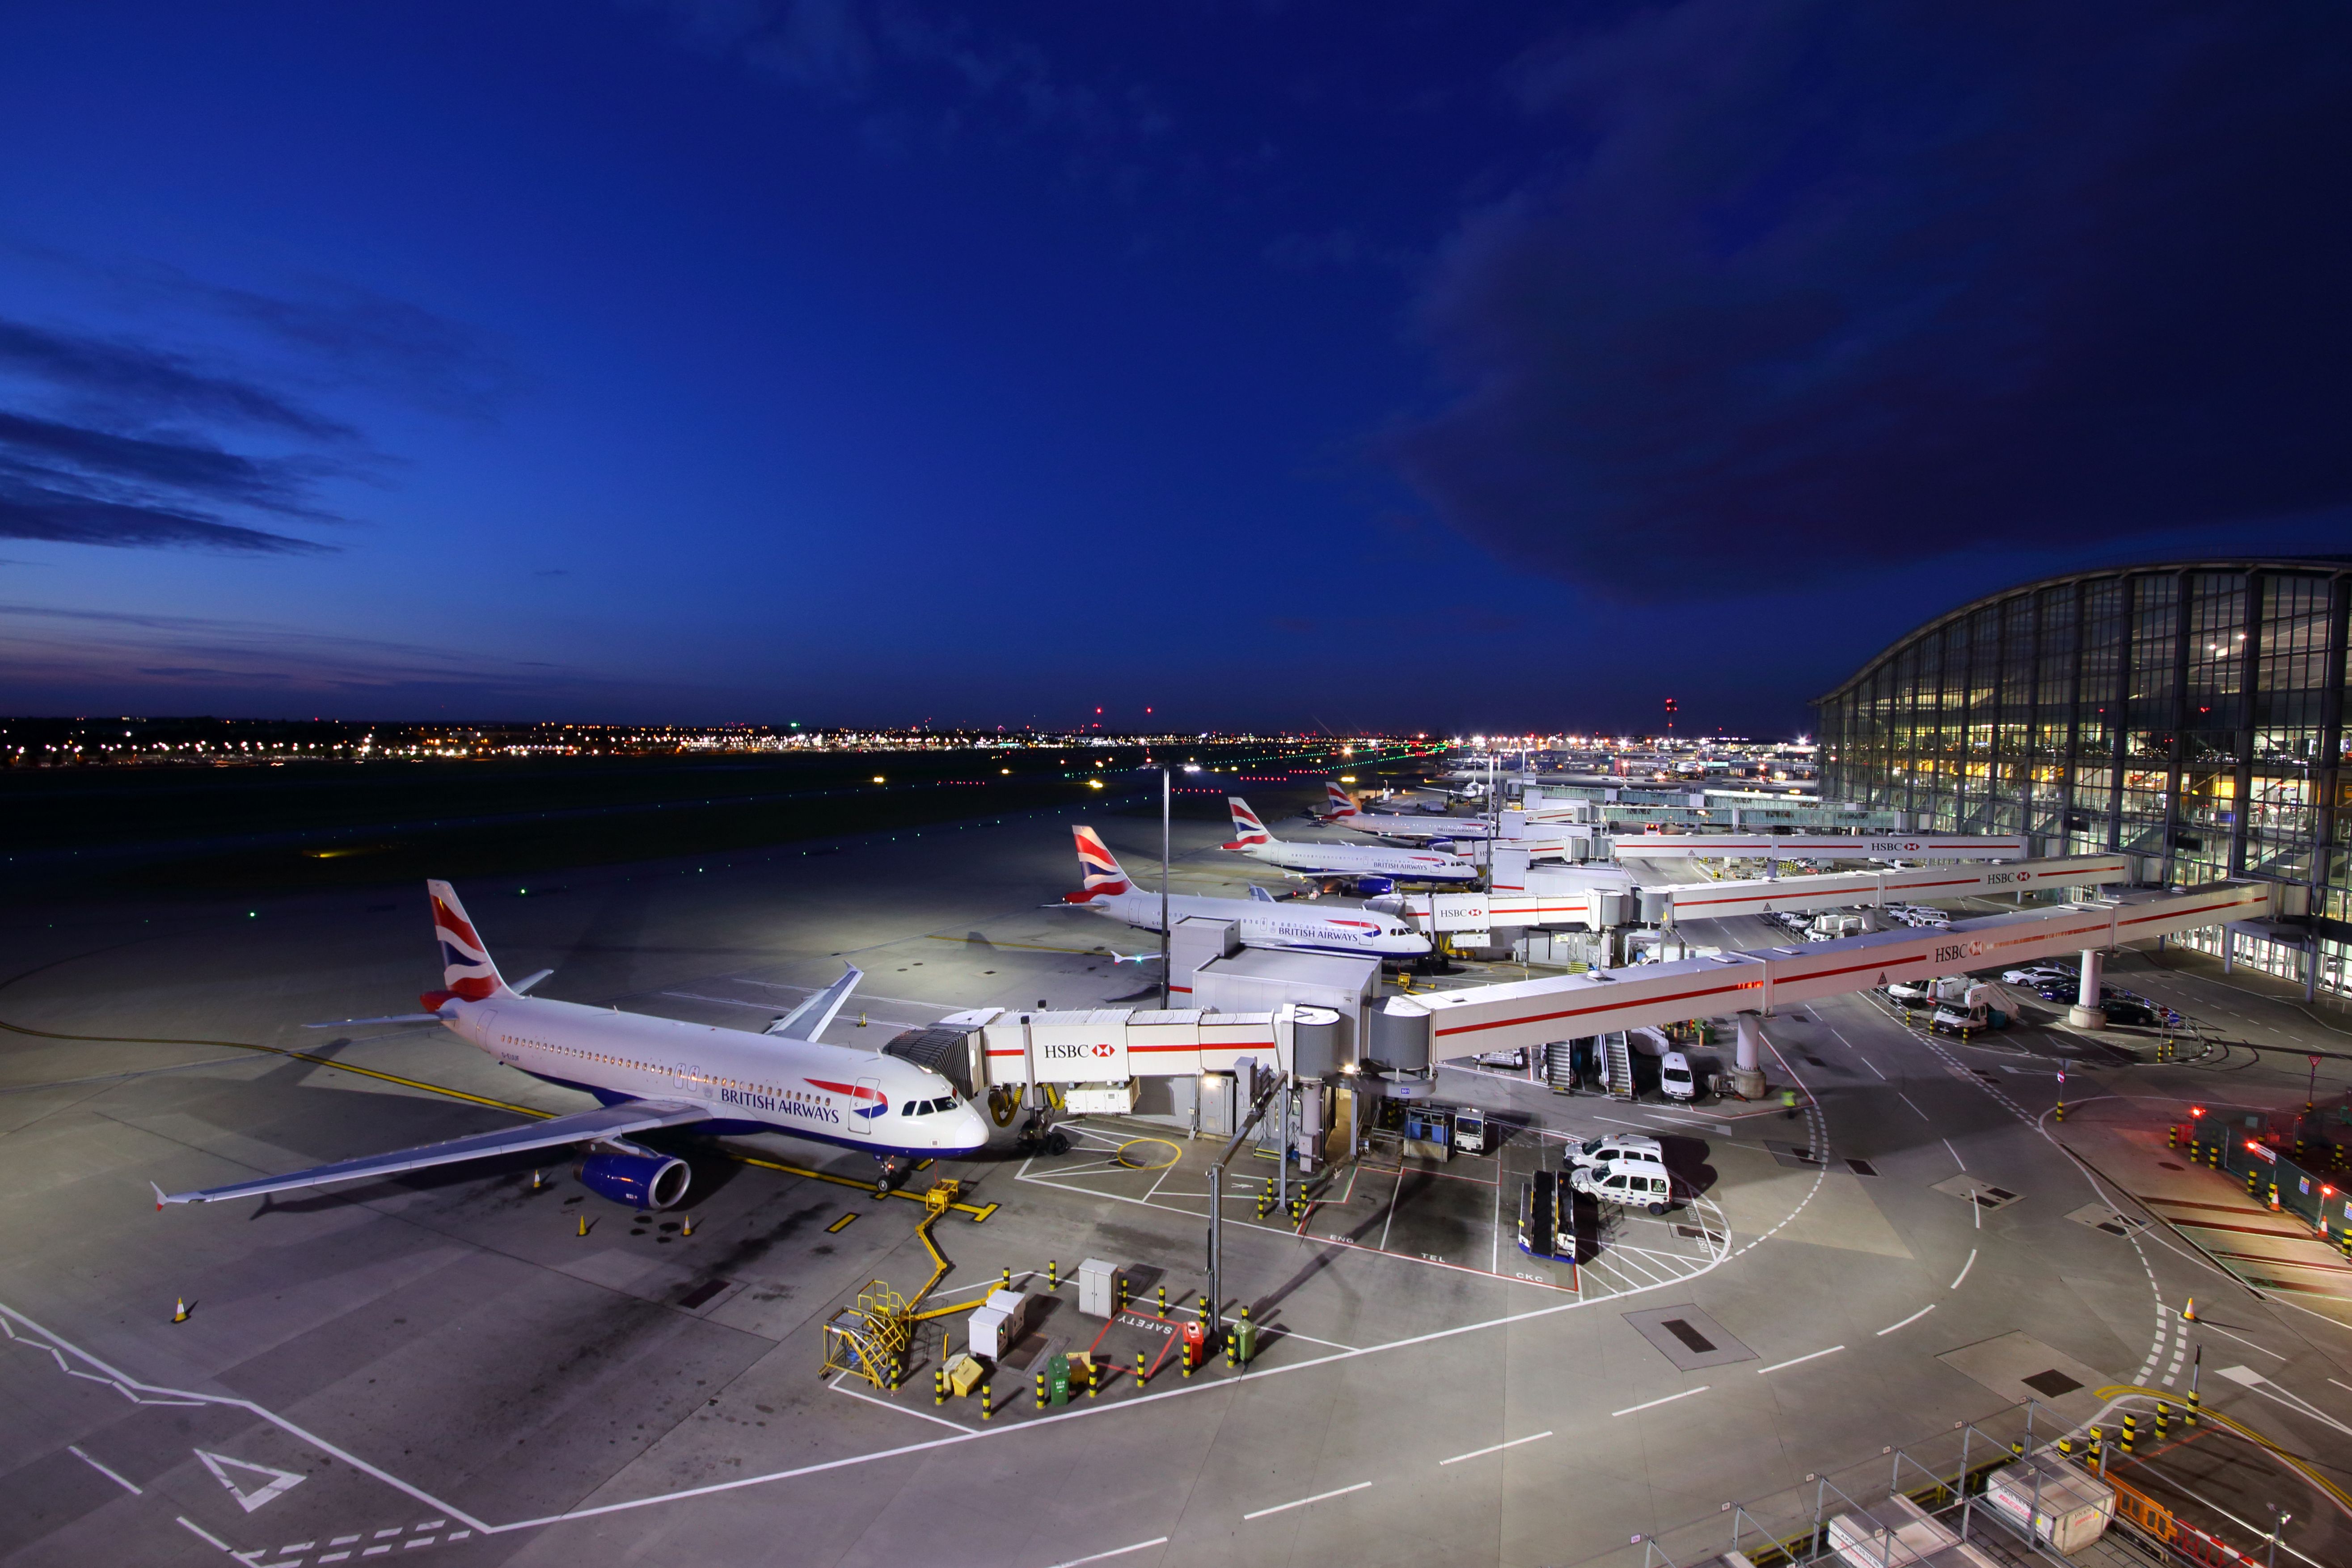 Heathrow Airport with British Airways planes at gates